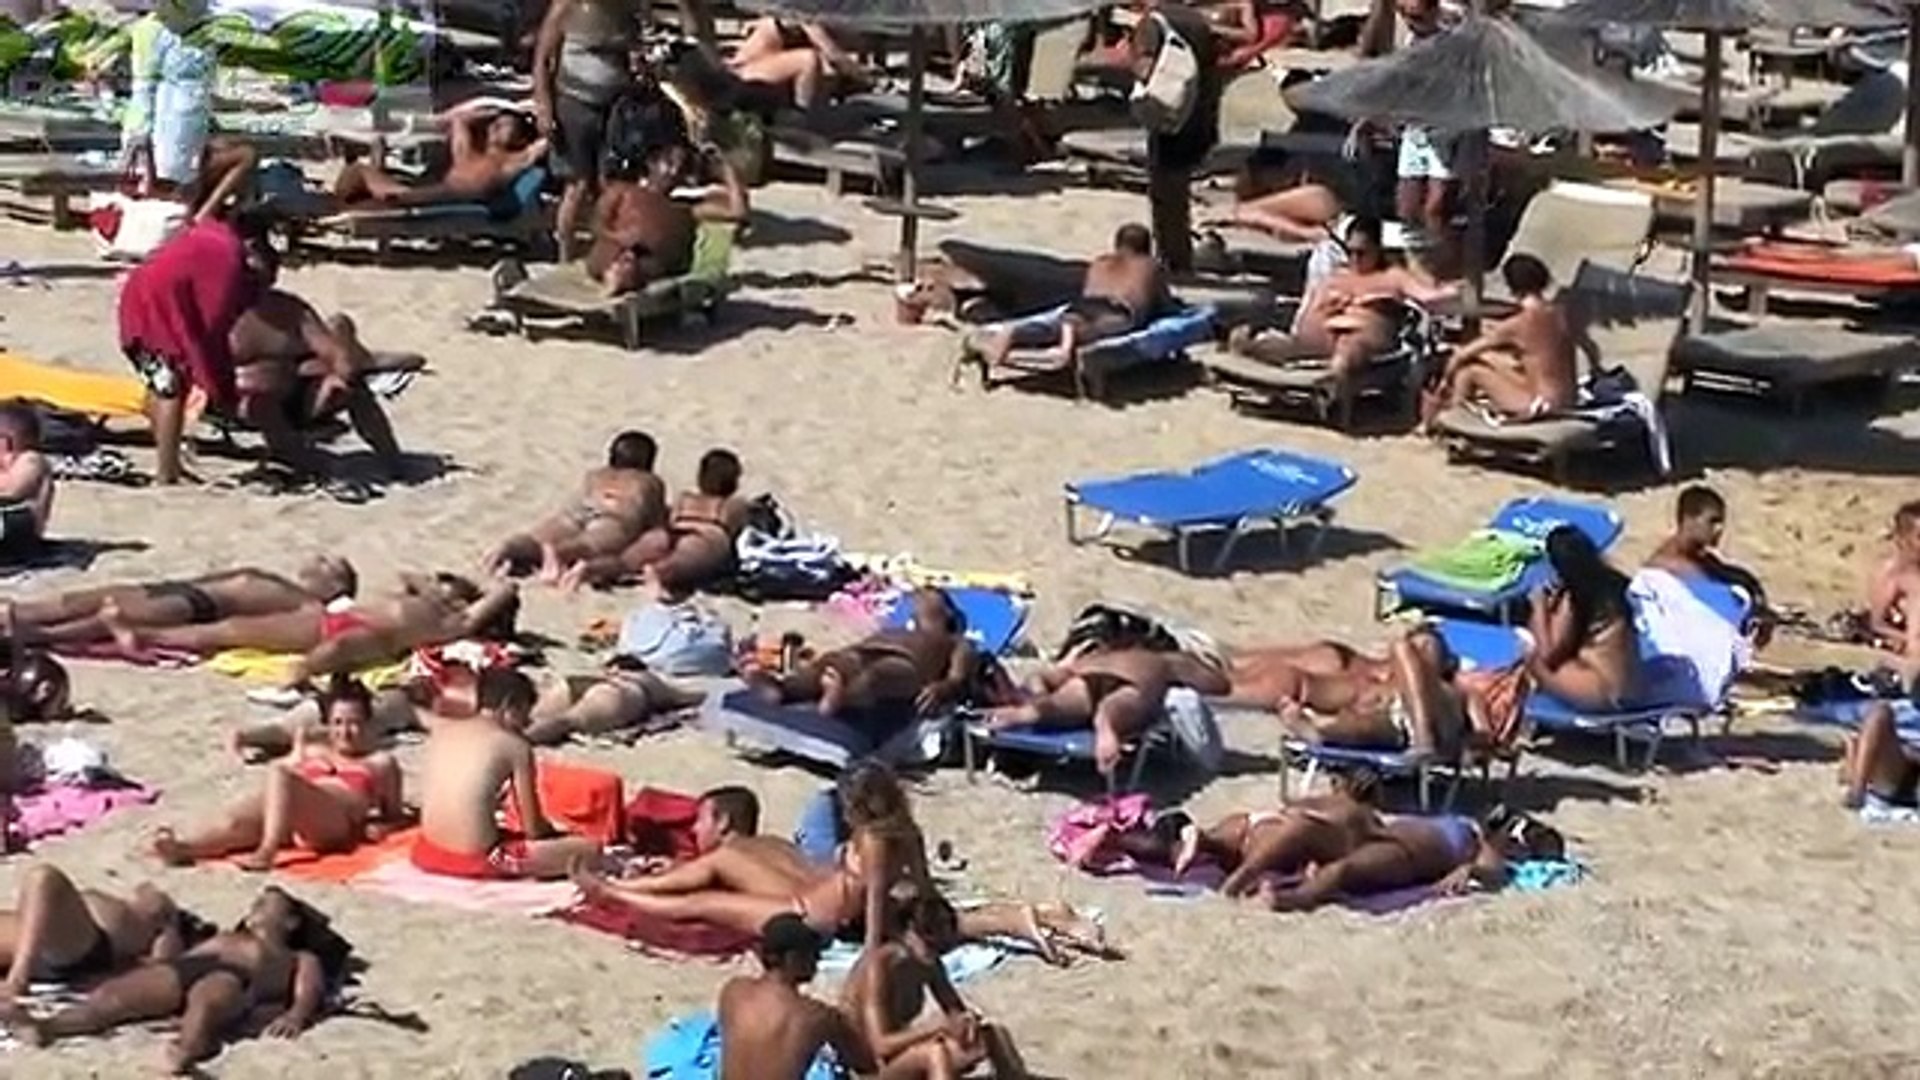 Hot Girls Tanning Naked Koktebel Nude Beach